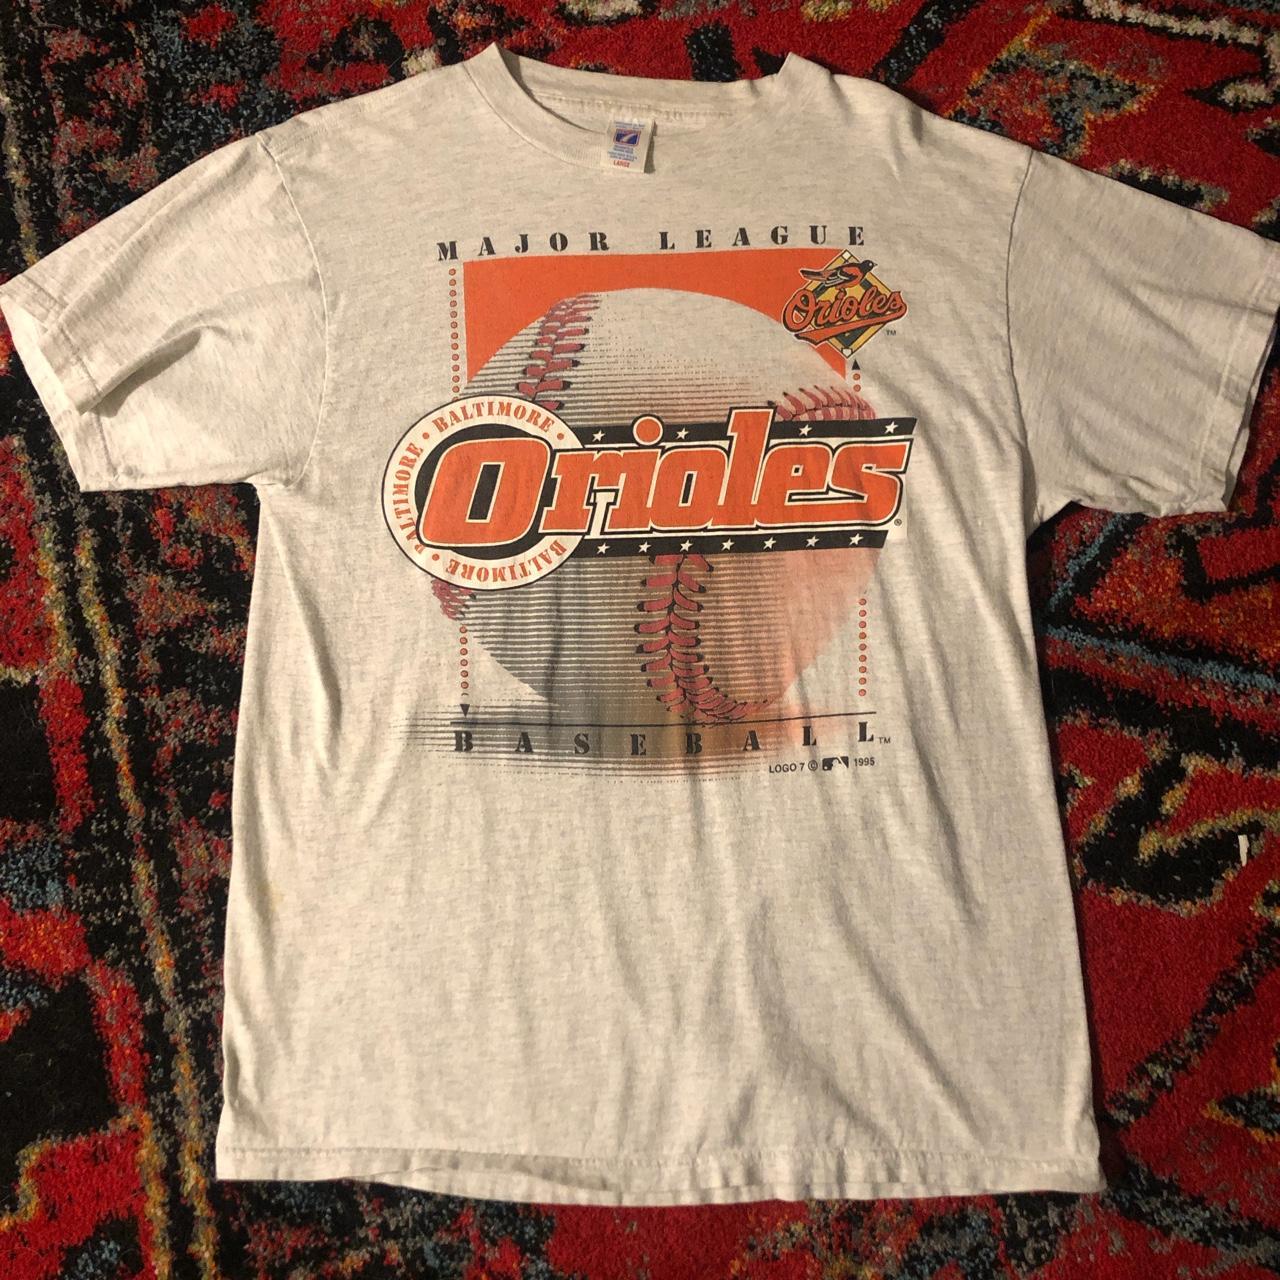 MLB Polo Shirt - Baltimore Orioles, Large